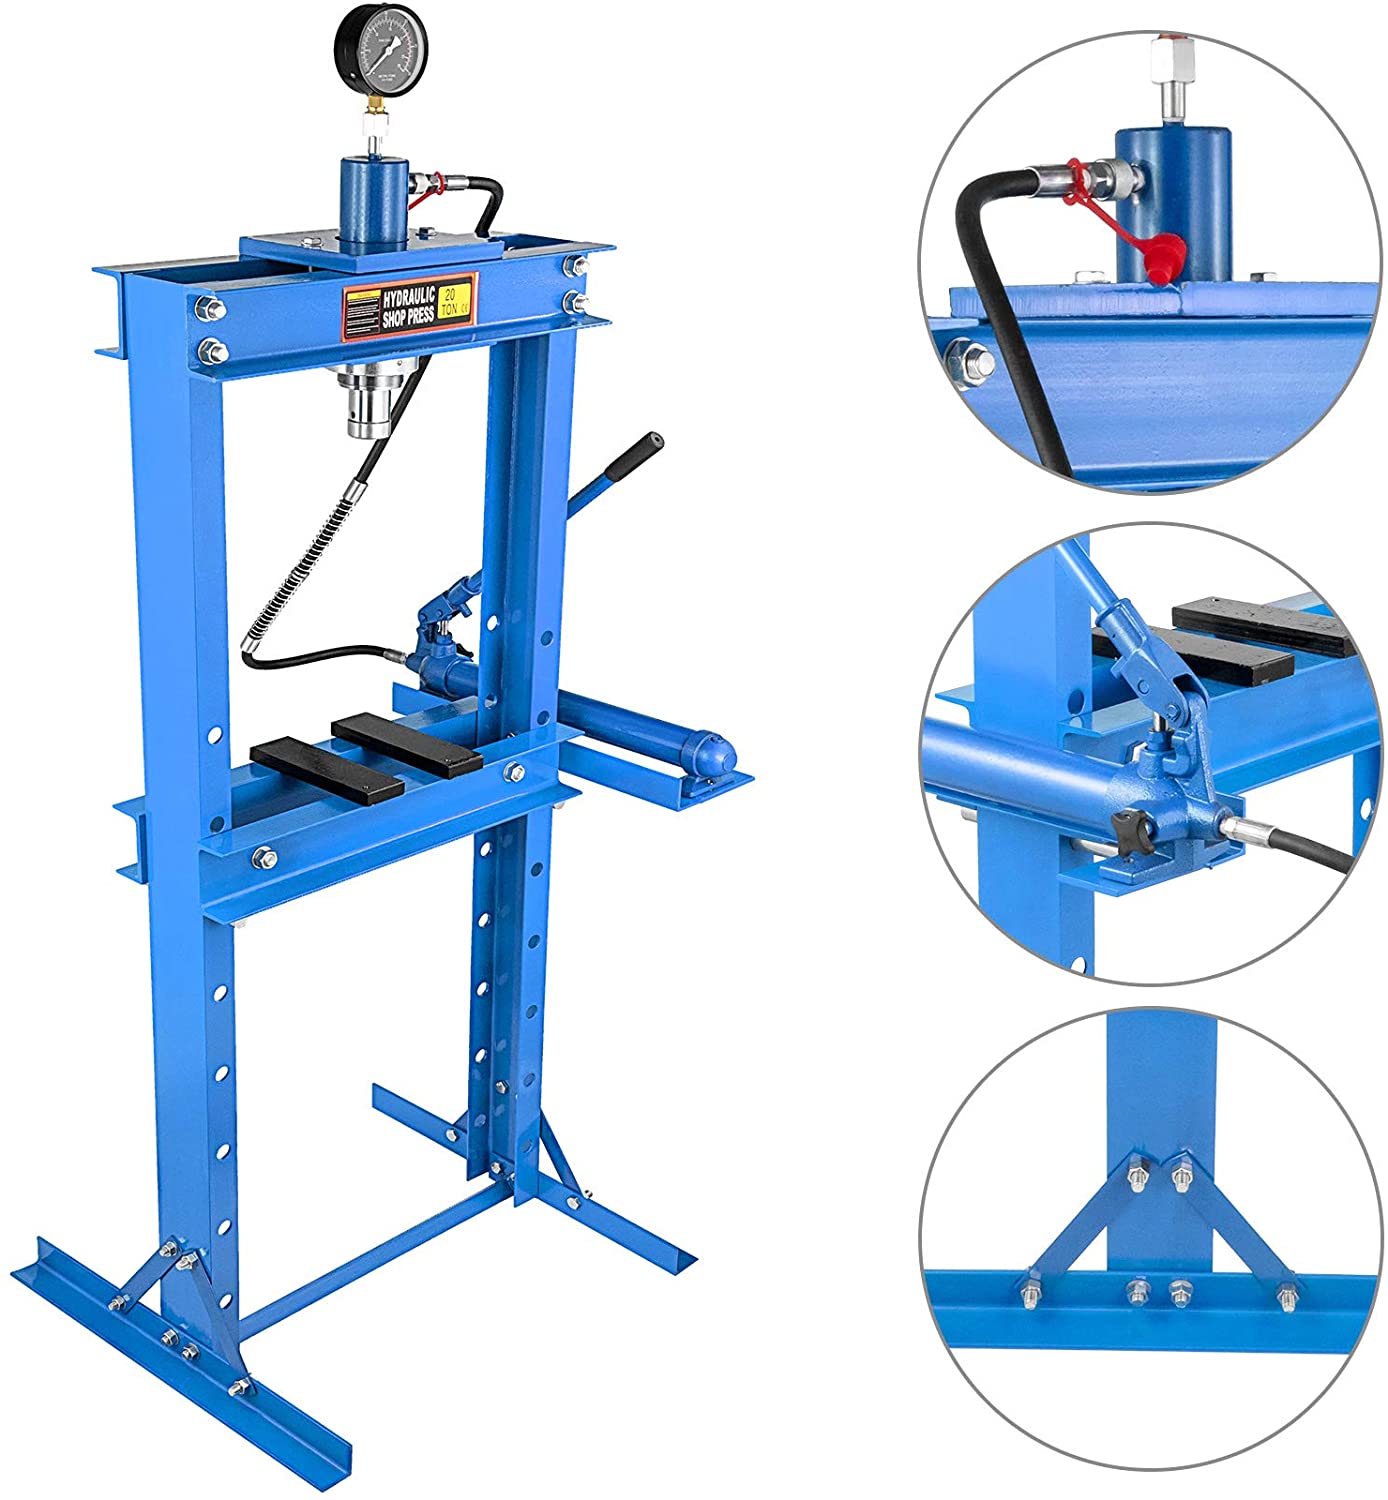 20T hydraulic shop press with hand pump